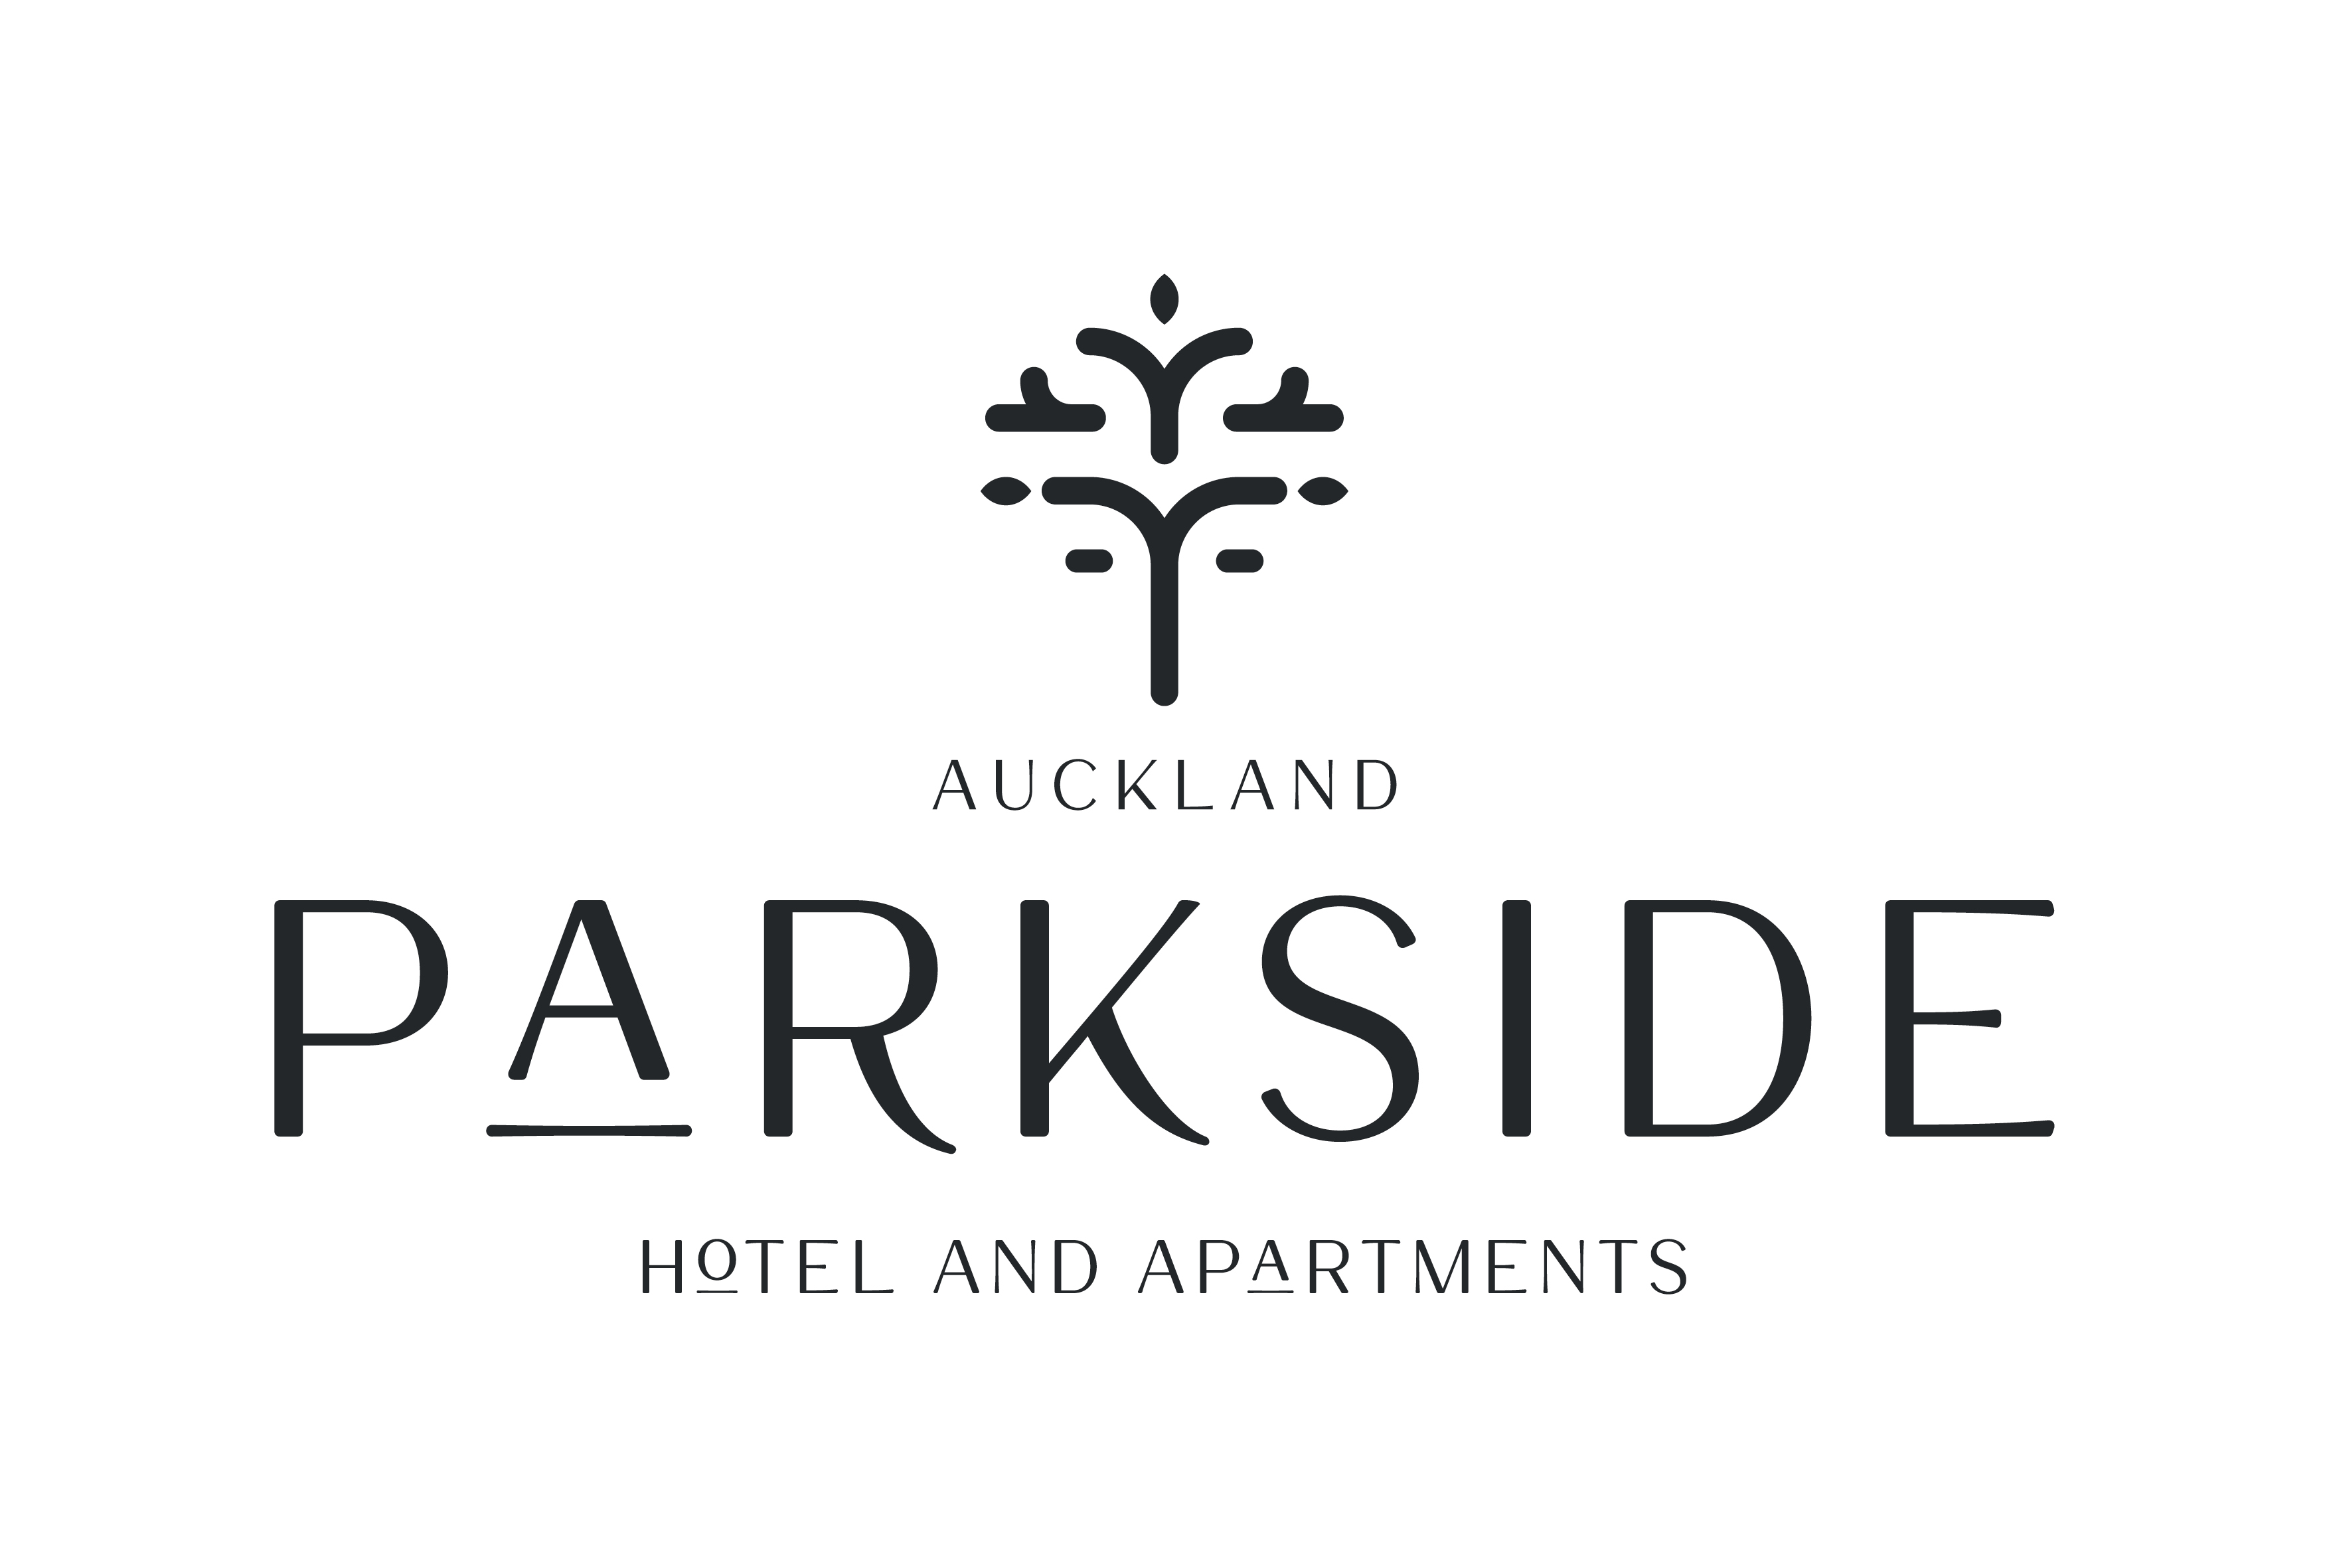 
Parkside Hotel & Apartments